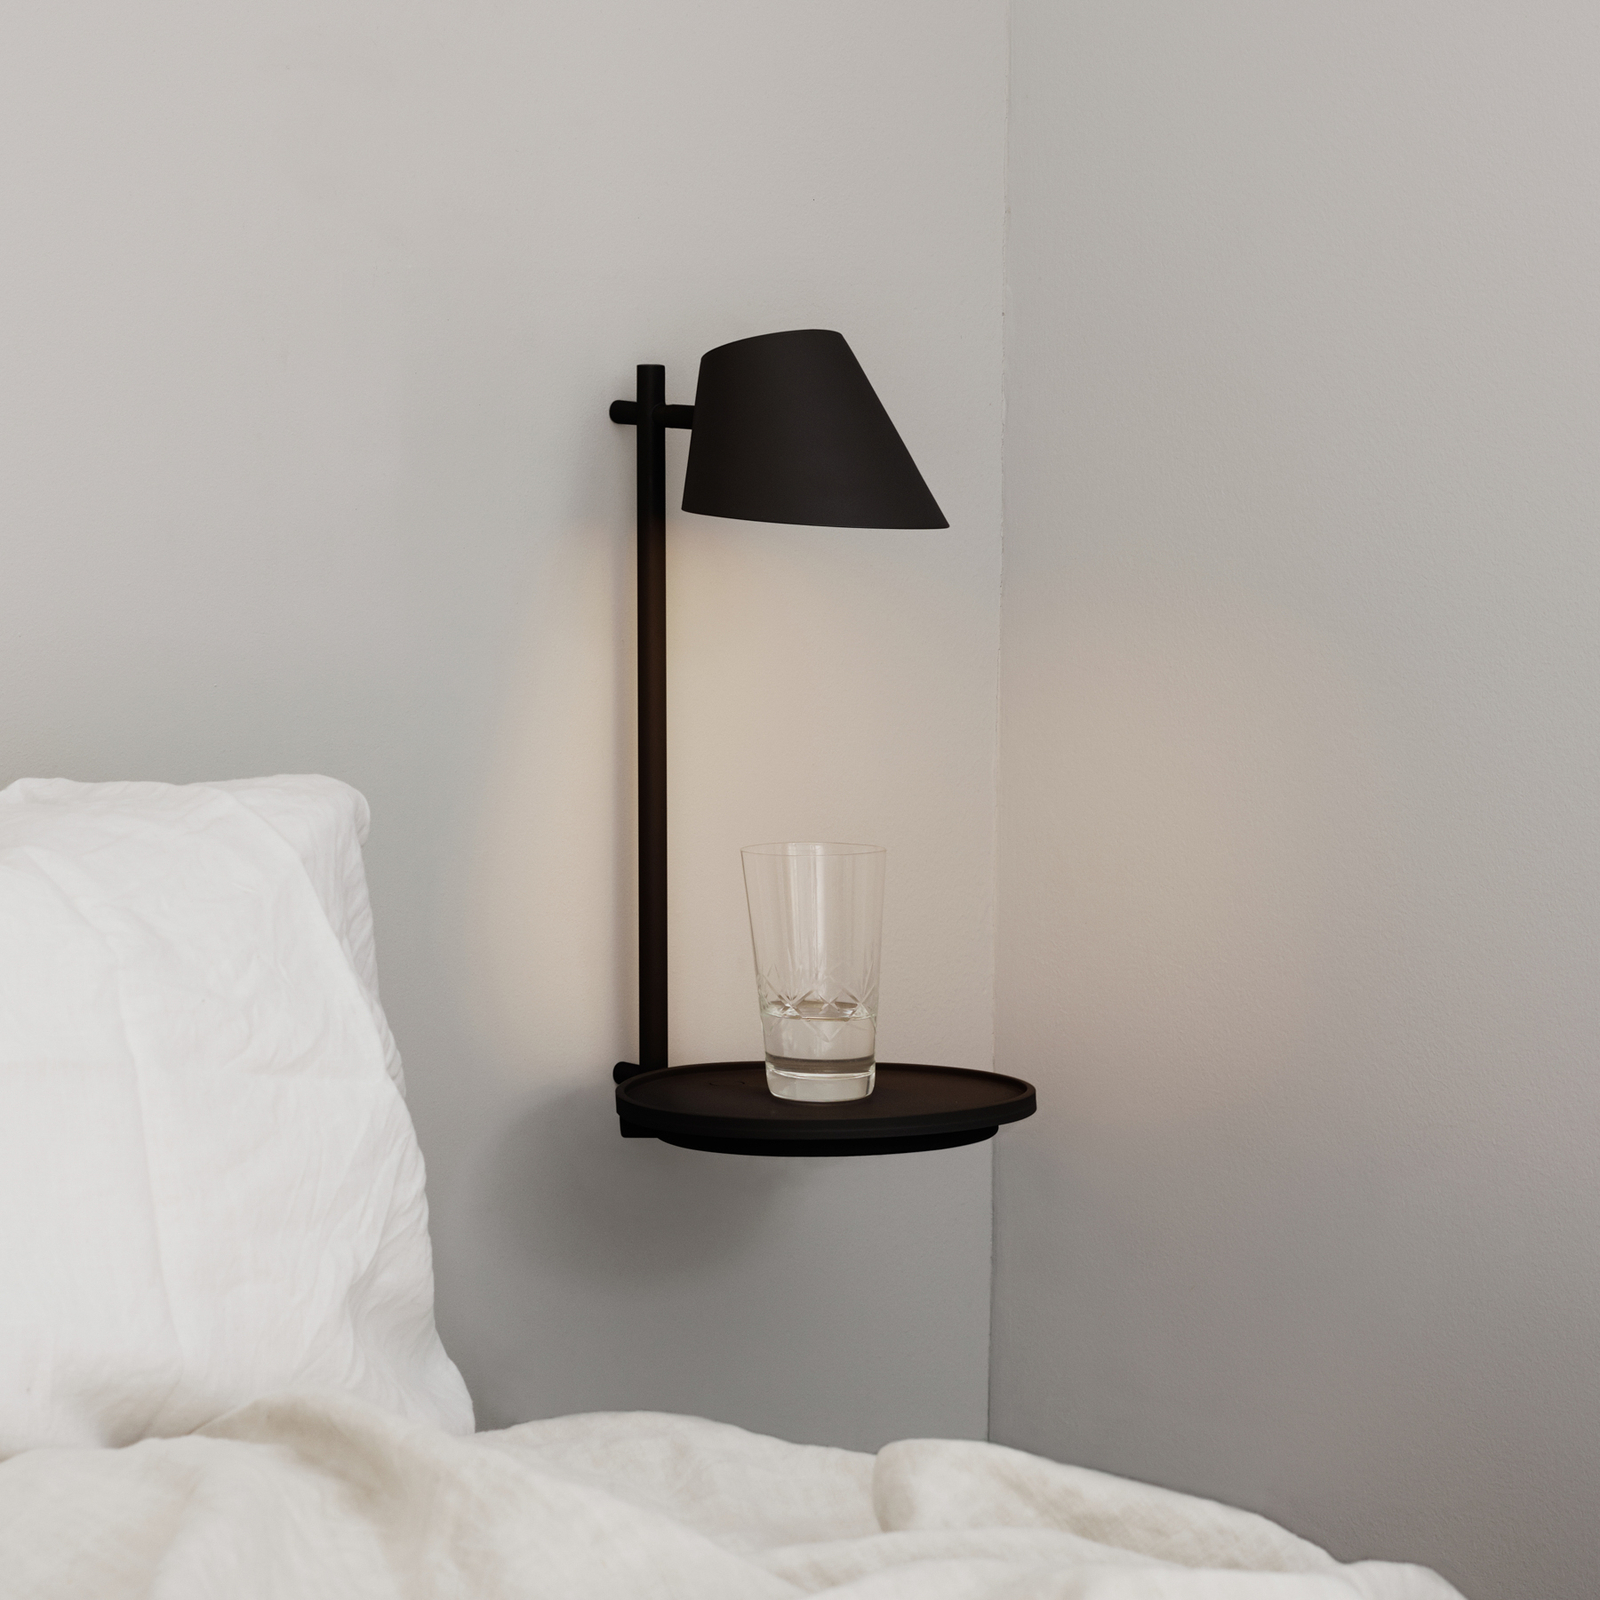 Stay LED wall light with a shelf, black